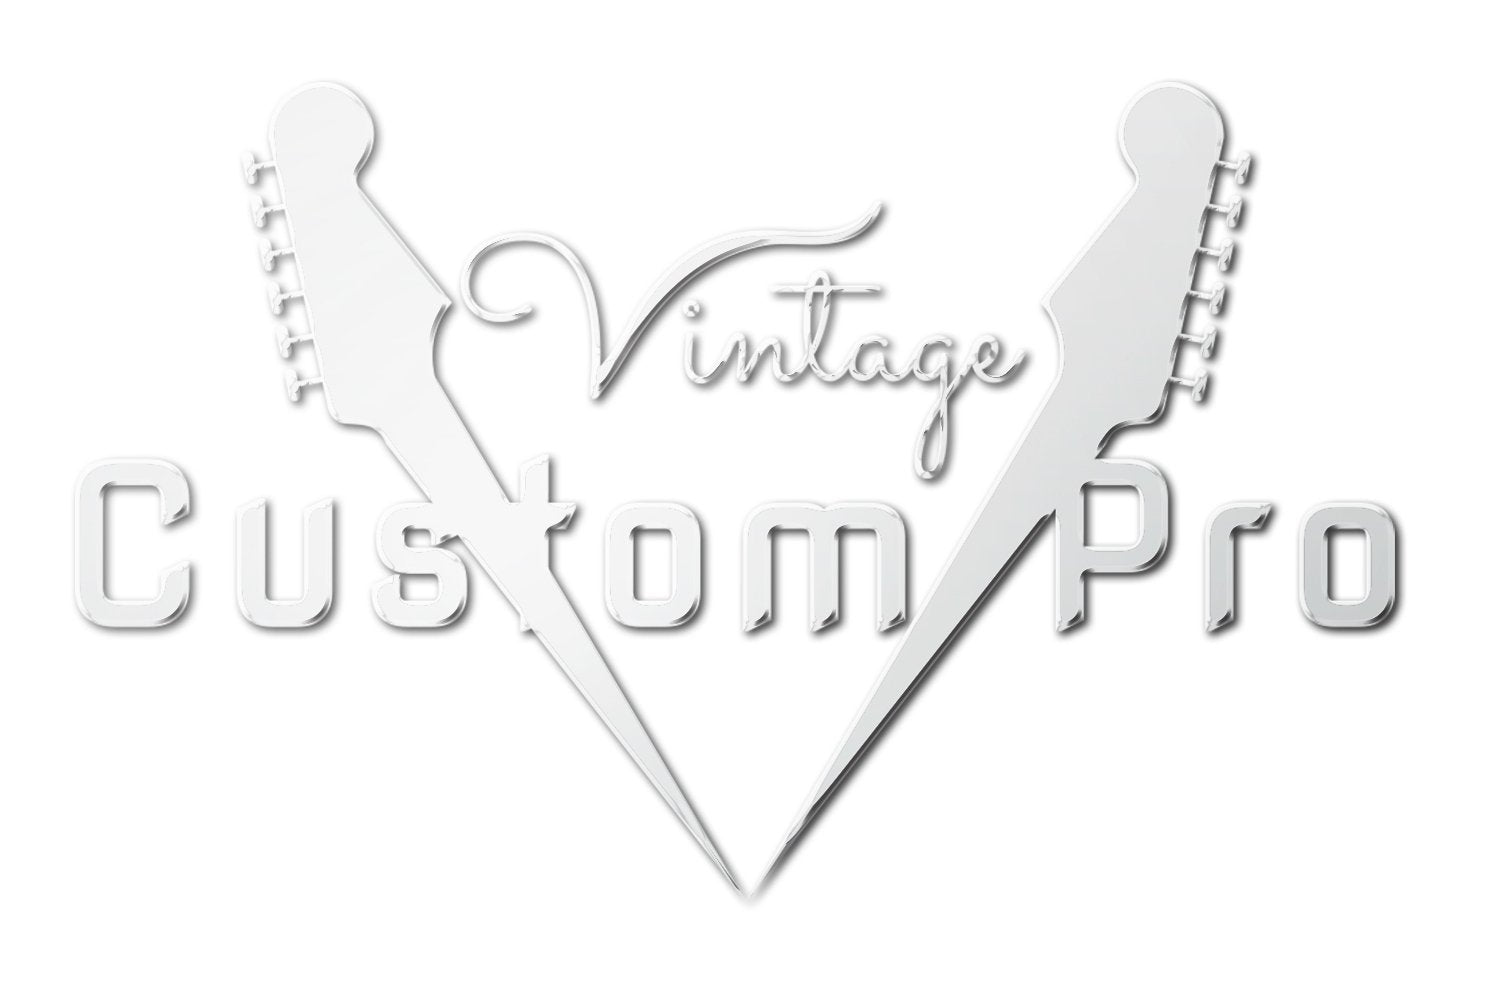 Vintage* V52MRBS Electric Guitar, Electric Guitar for sale at Richards Guitars.